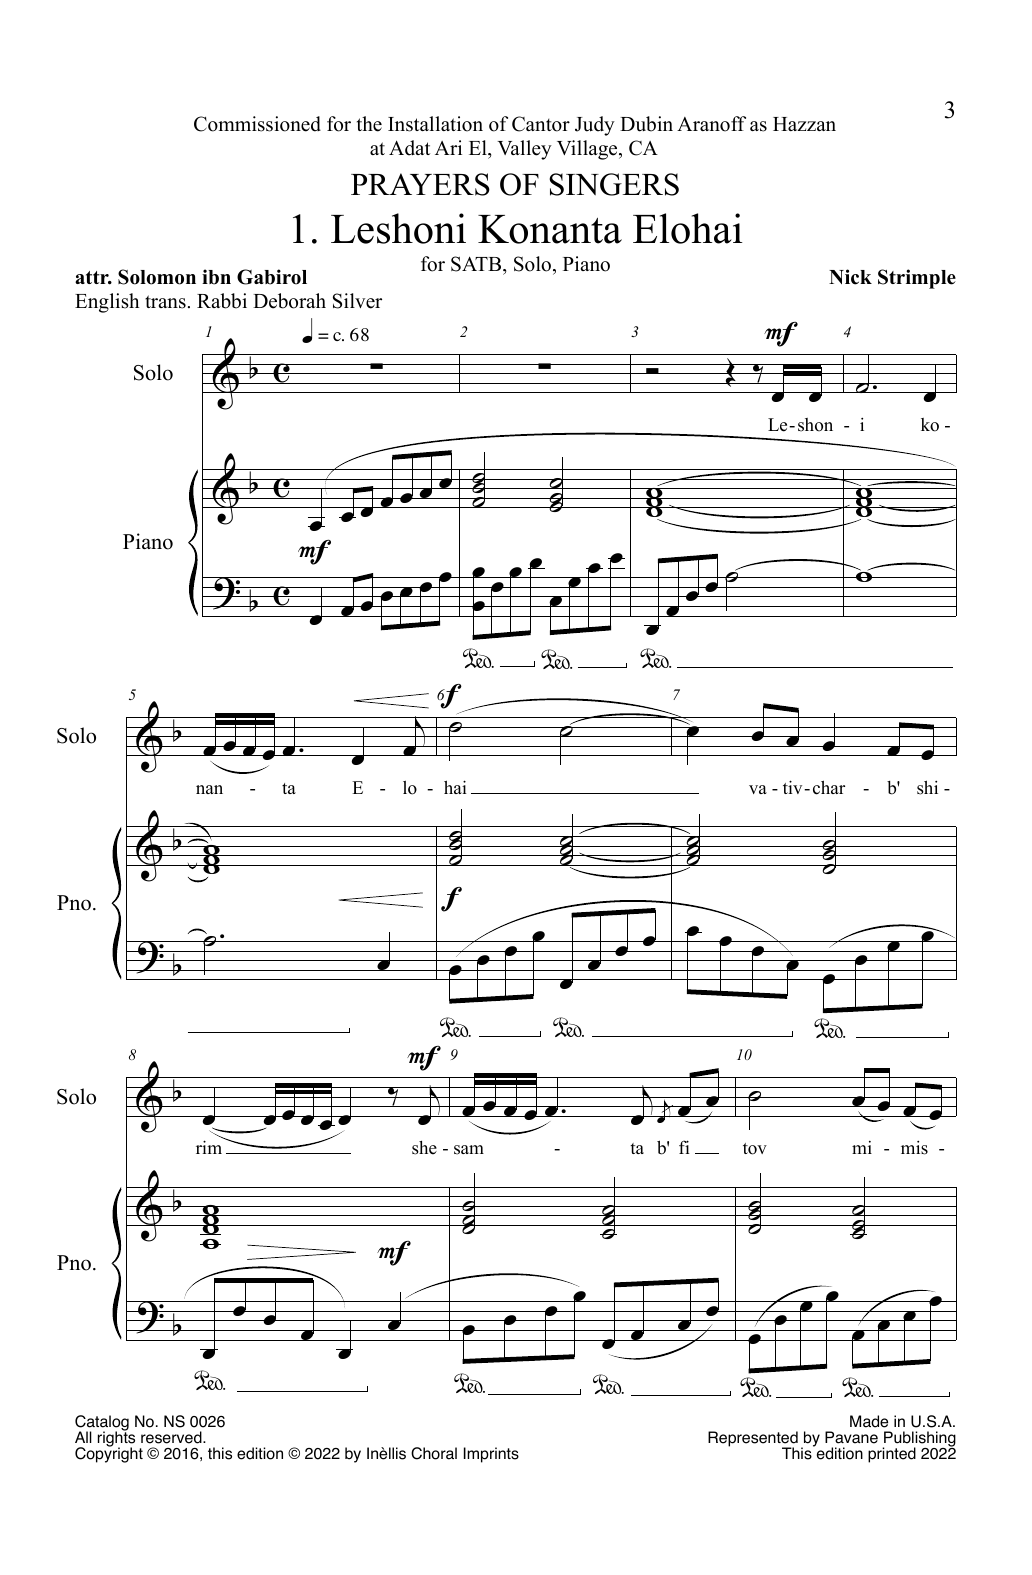 Nick Strimple Leshoni Konanta Elohai Sheet Music Notes & Chords for SATB Choir - Download or Print PDF